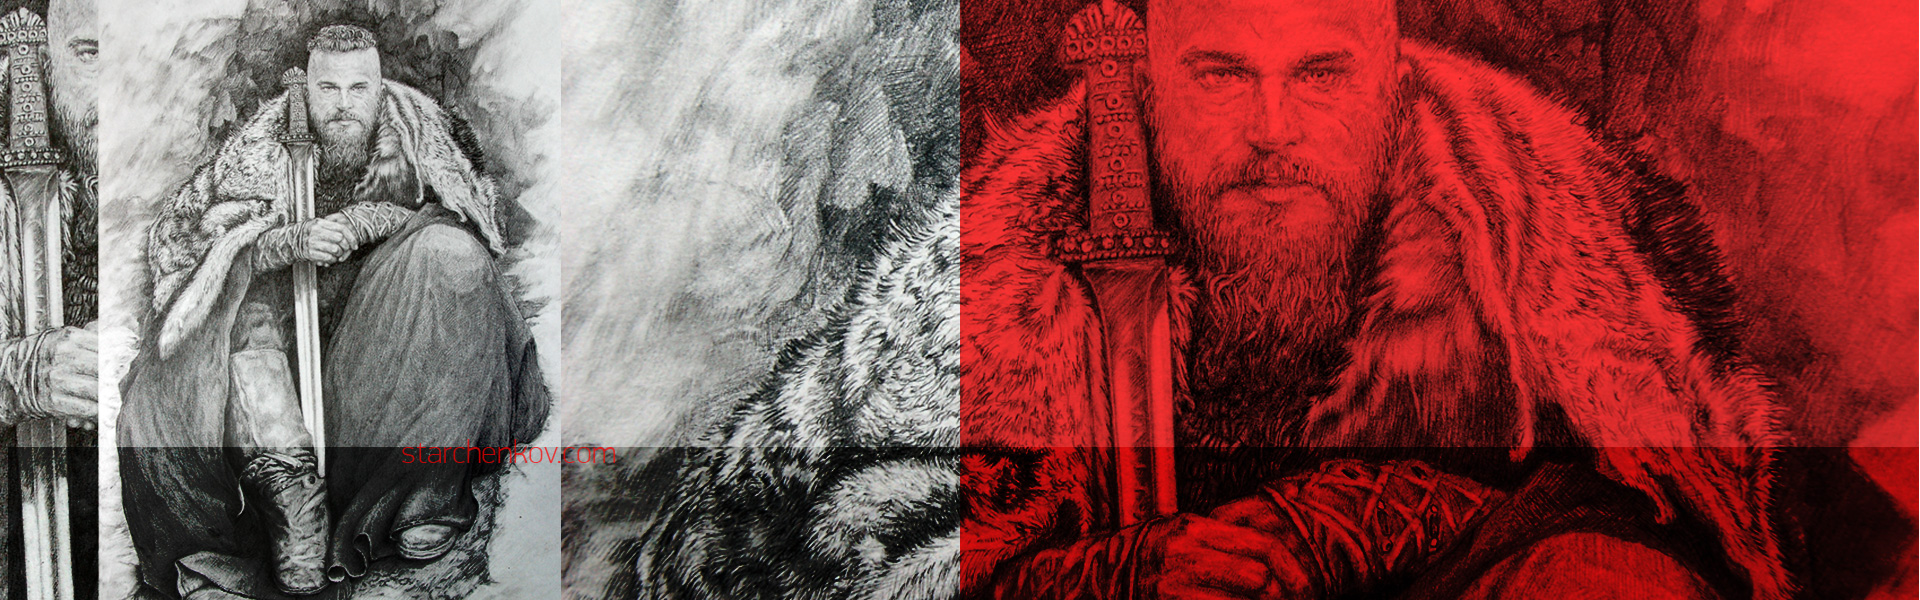 ragnar, lodbrok, vikings, рагнар, викинг, викинги, воин, солдат, меч, сериал, Рагнар, Лодброк, арт, art, рисунок, карандаш, pencil